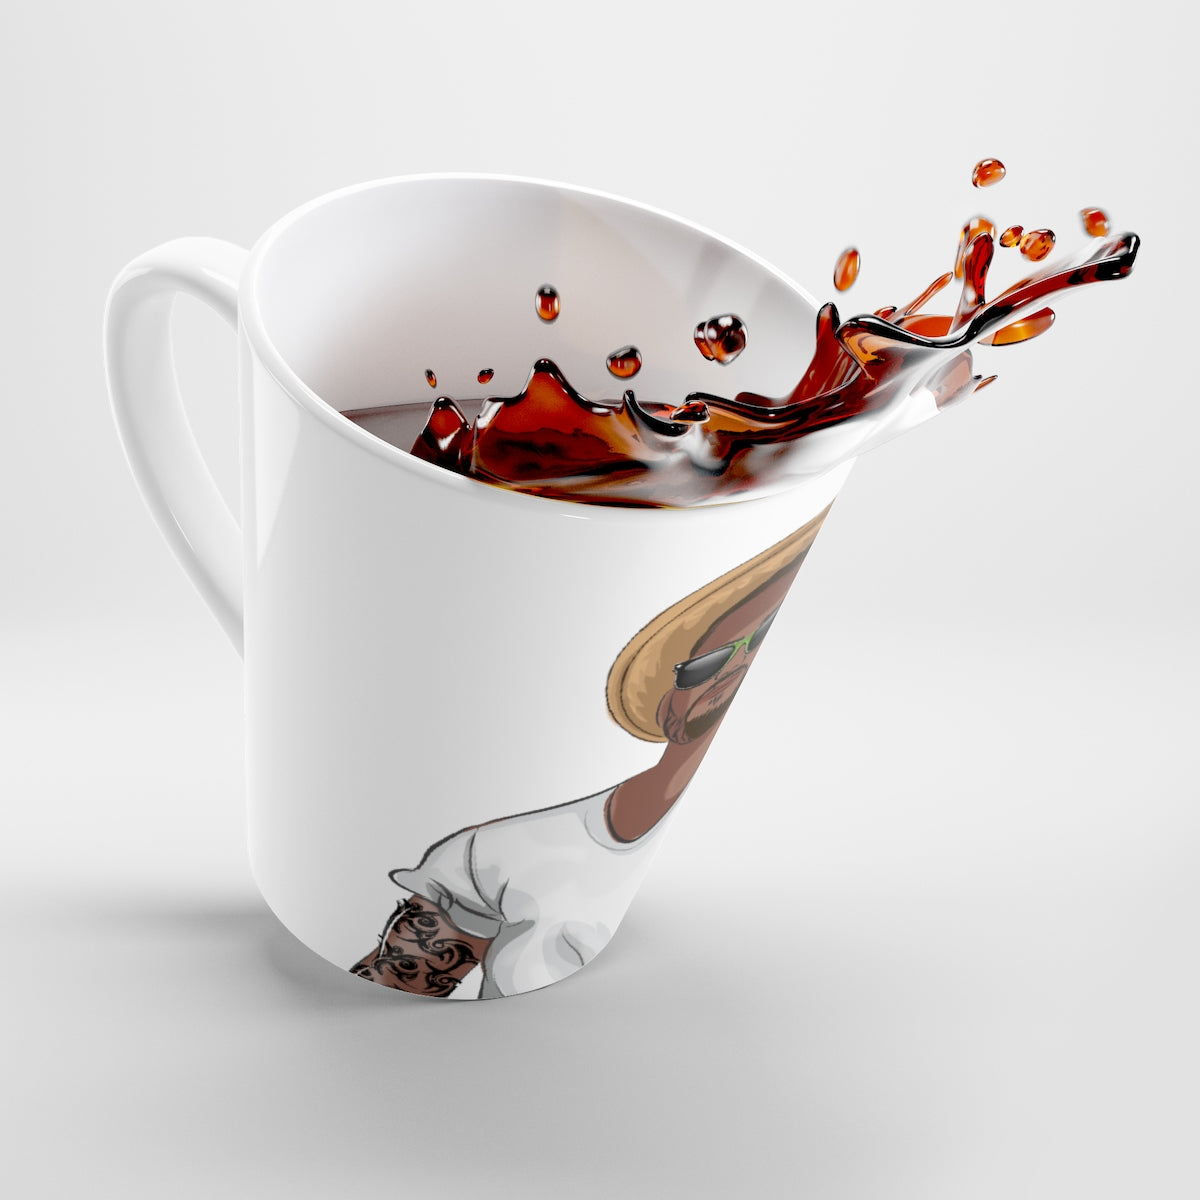 Label-less Latte mug